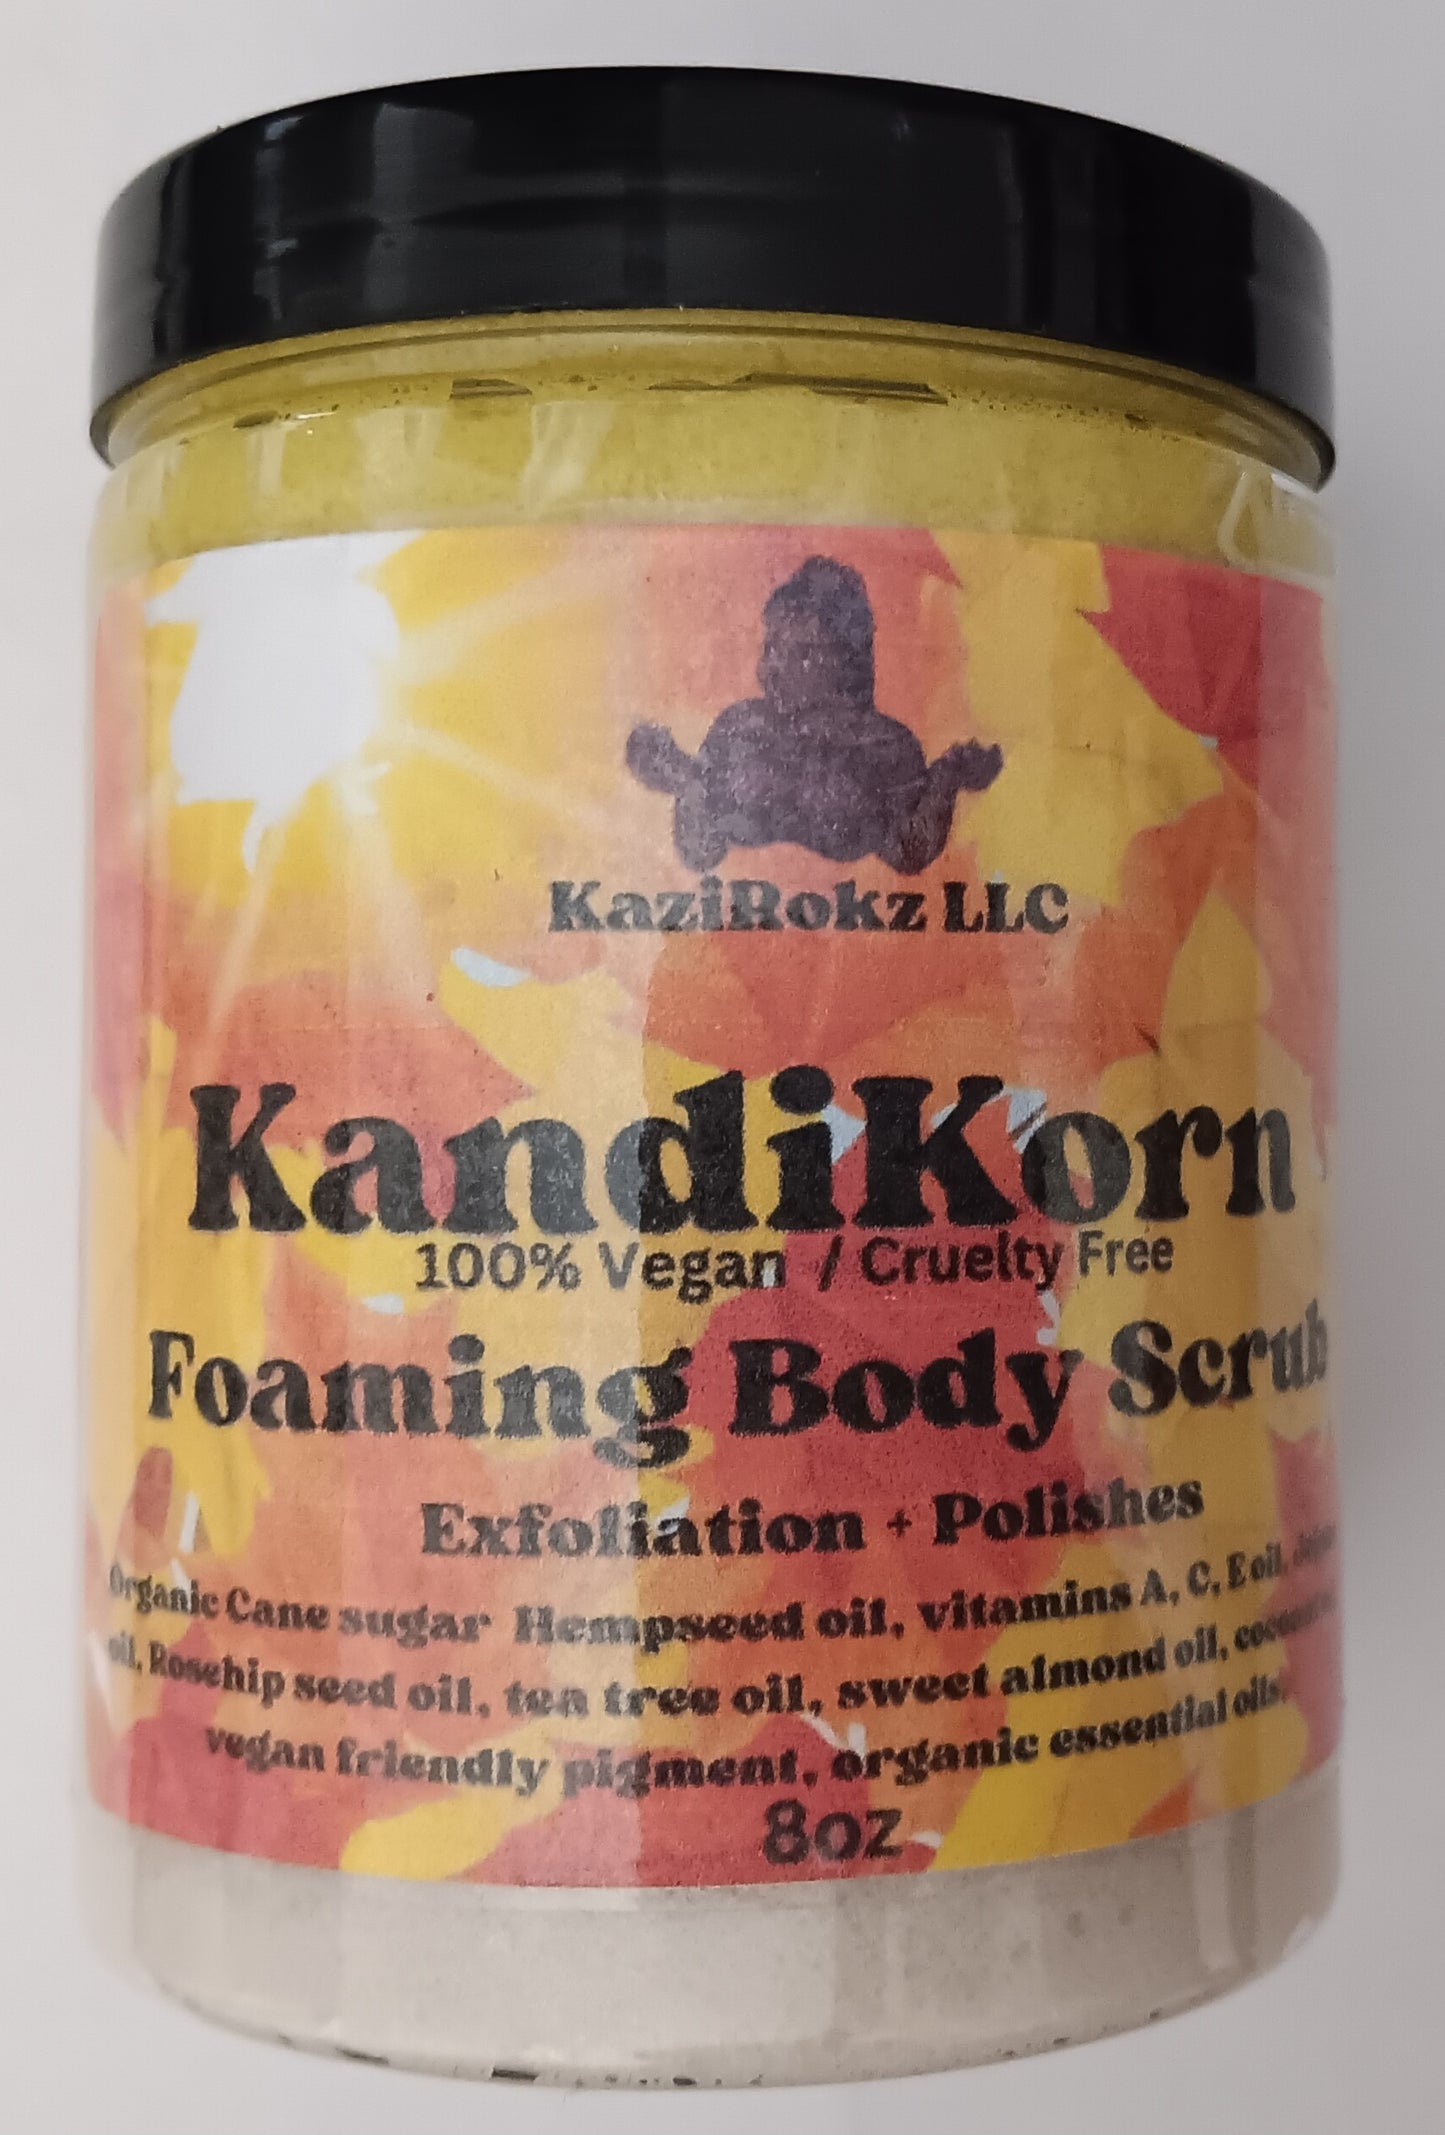 KandyKorn Foaming Body Scrub 8oz (100% Vegan / CrueltyFree)Fall Skincare collection + Halloween